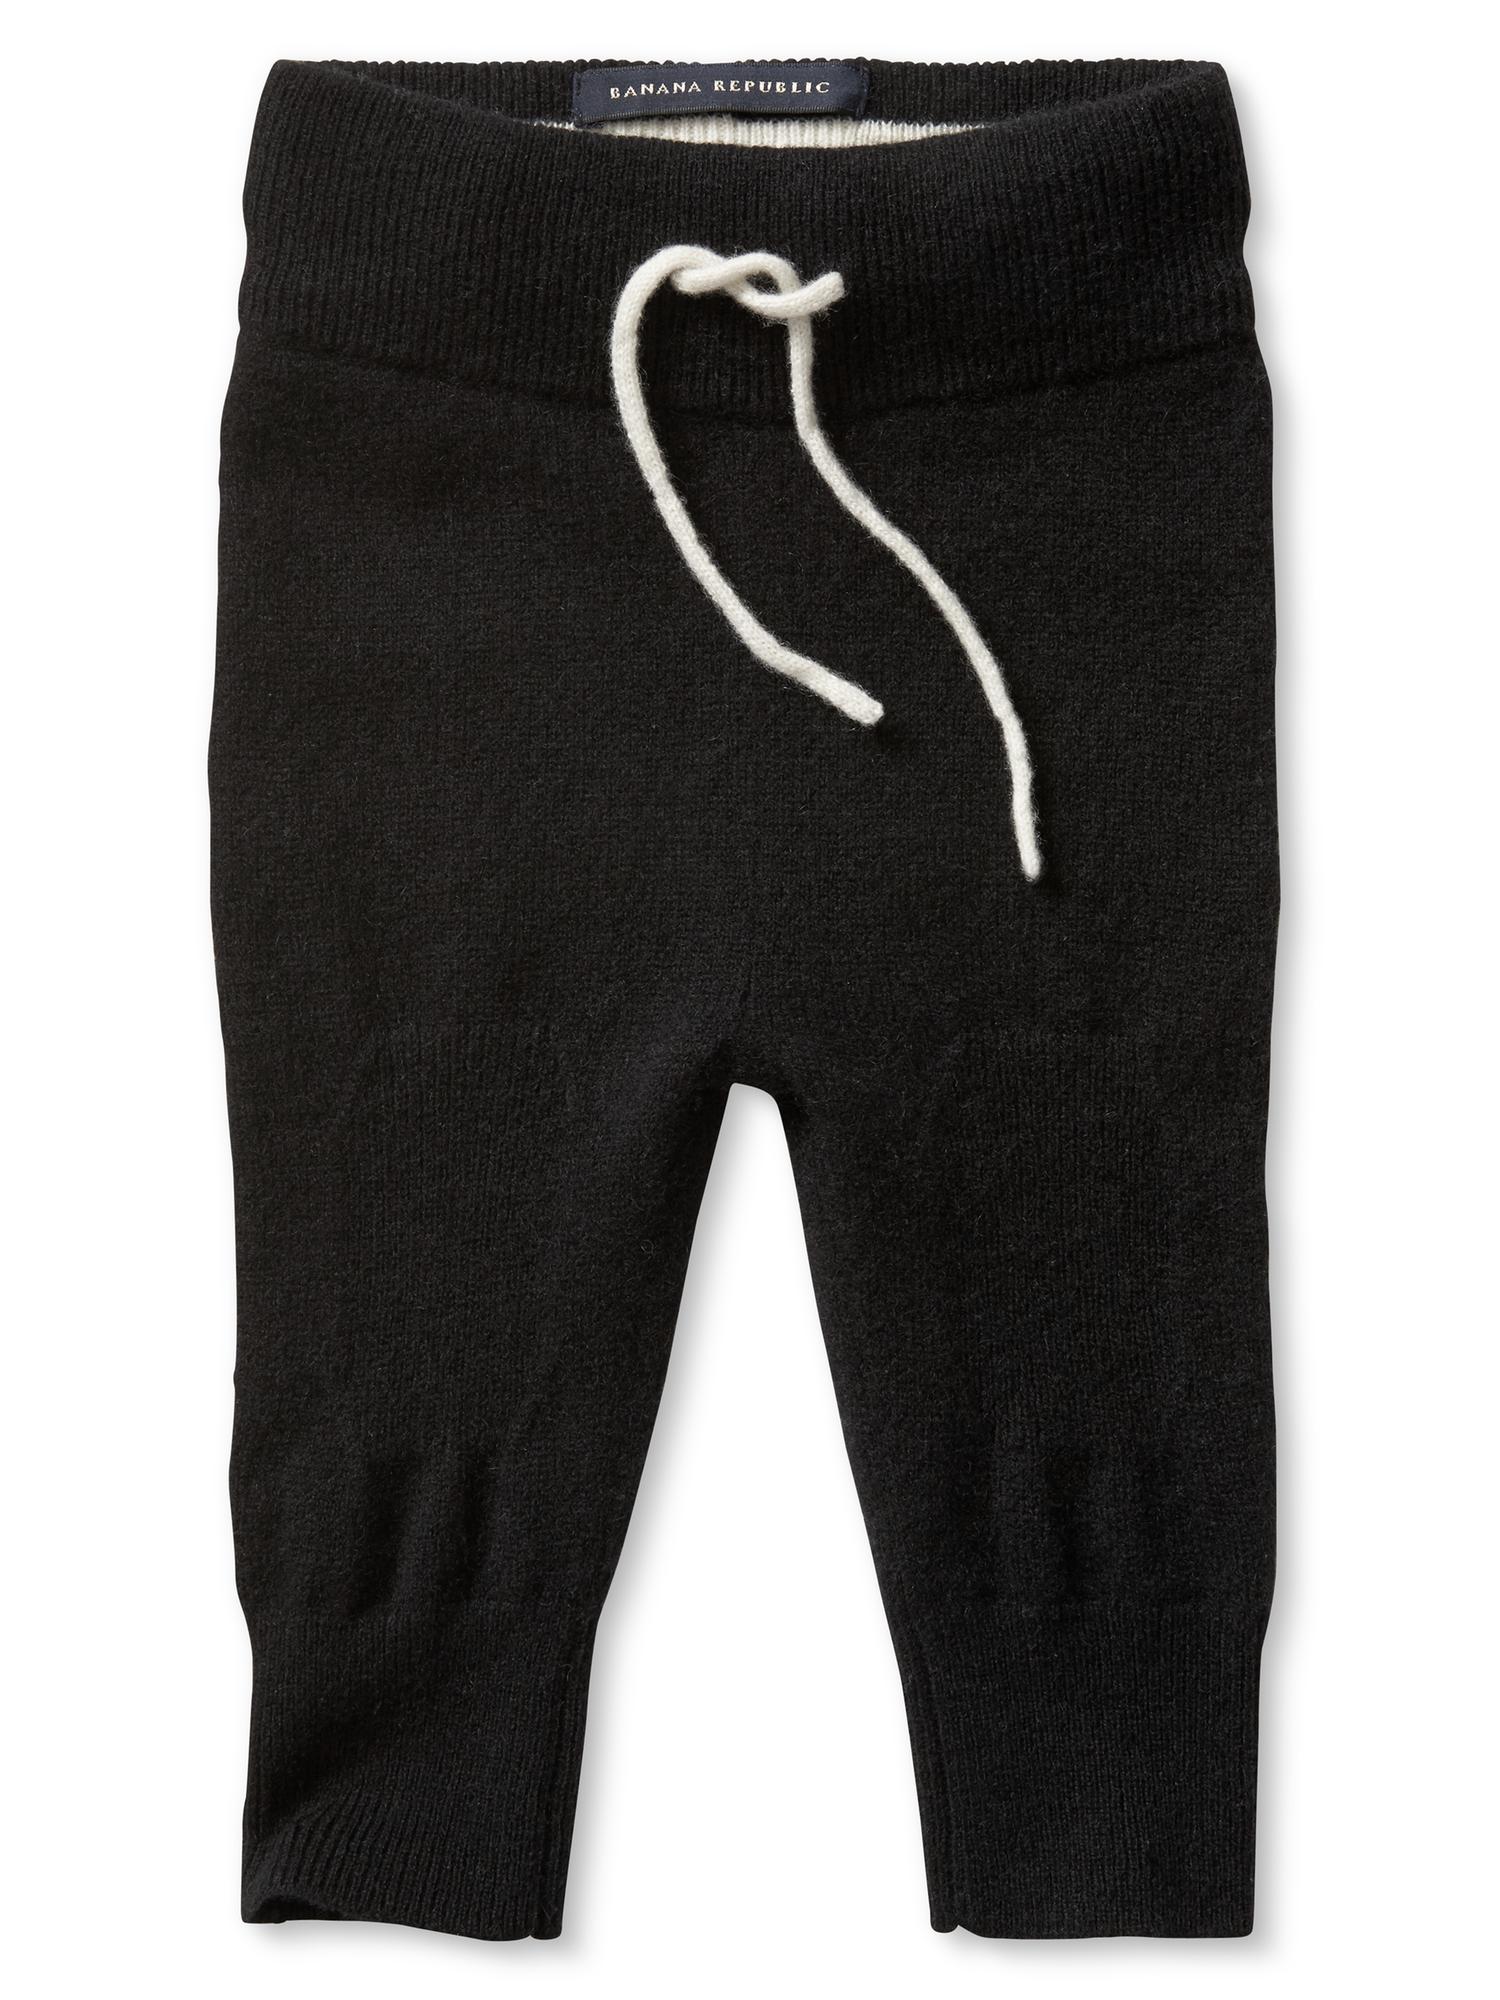 BR Mini Collection Cashmere Pant